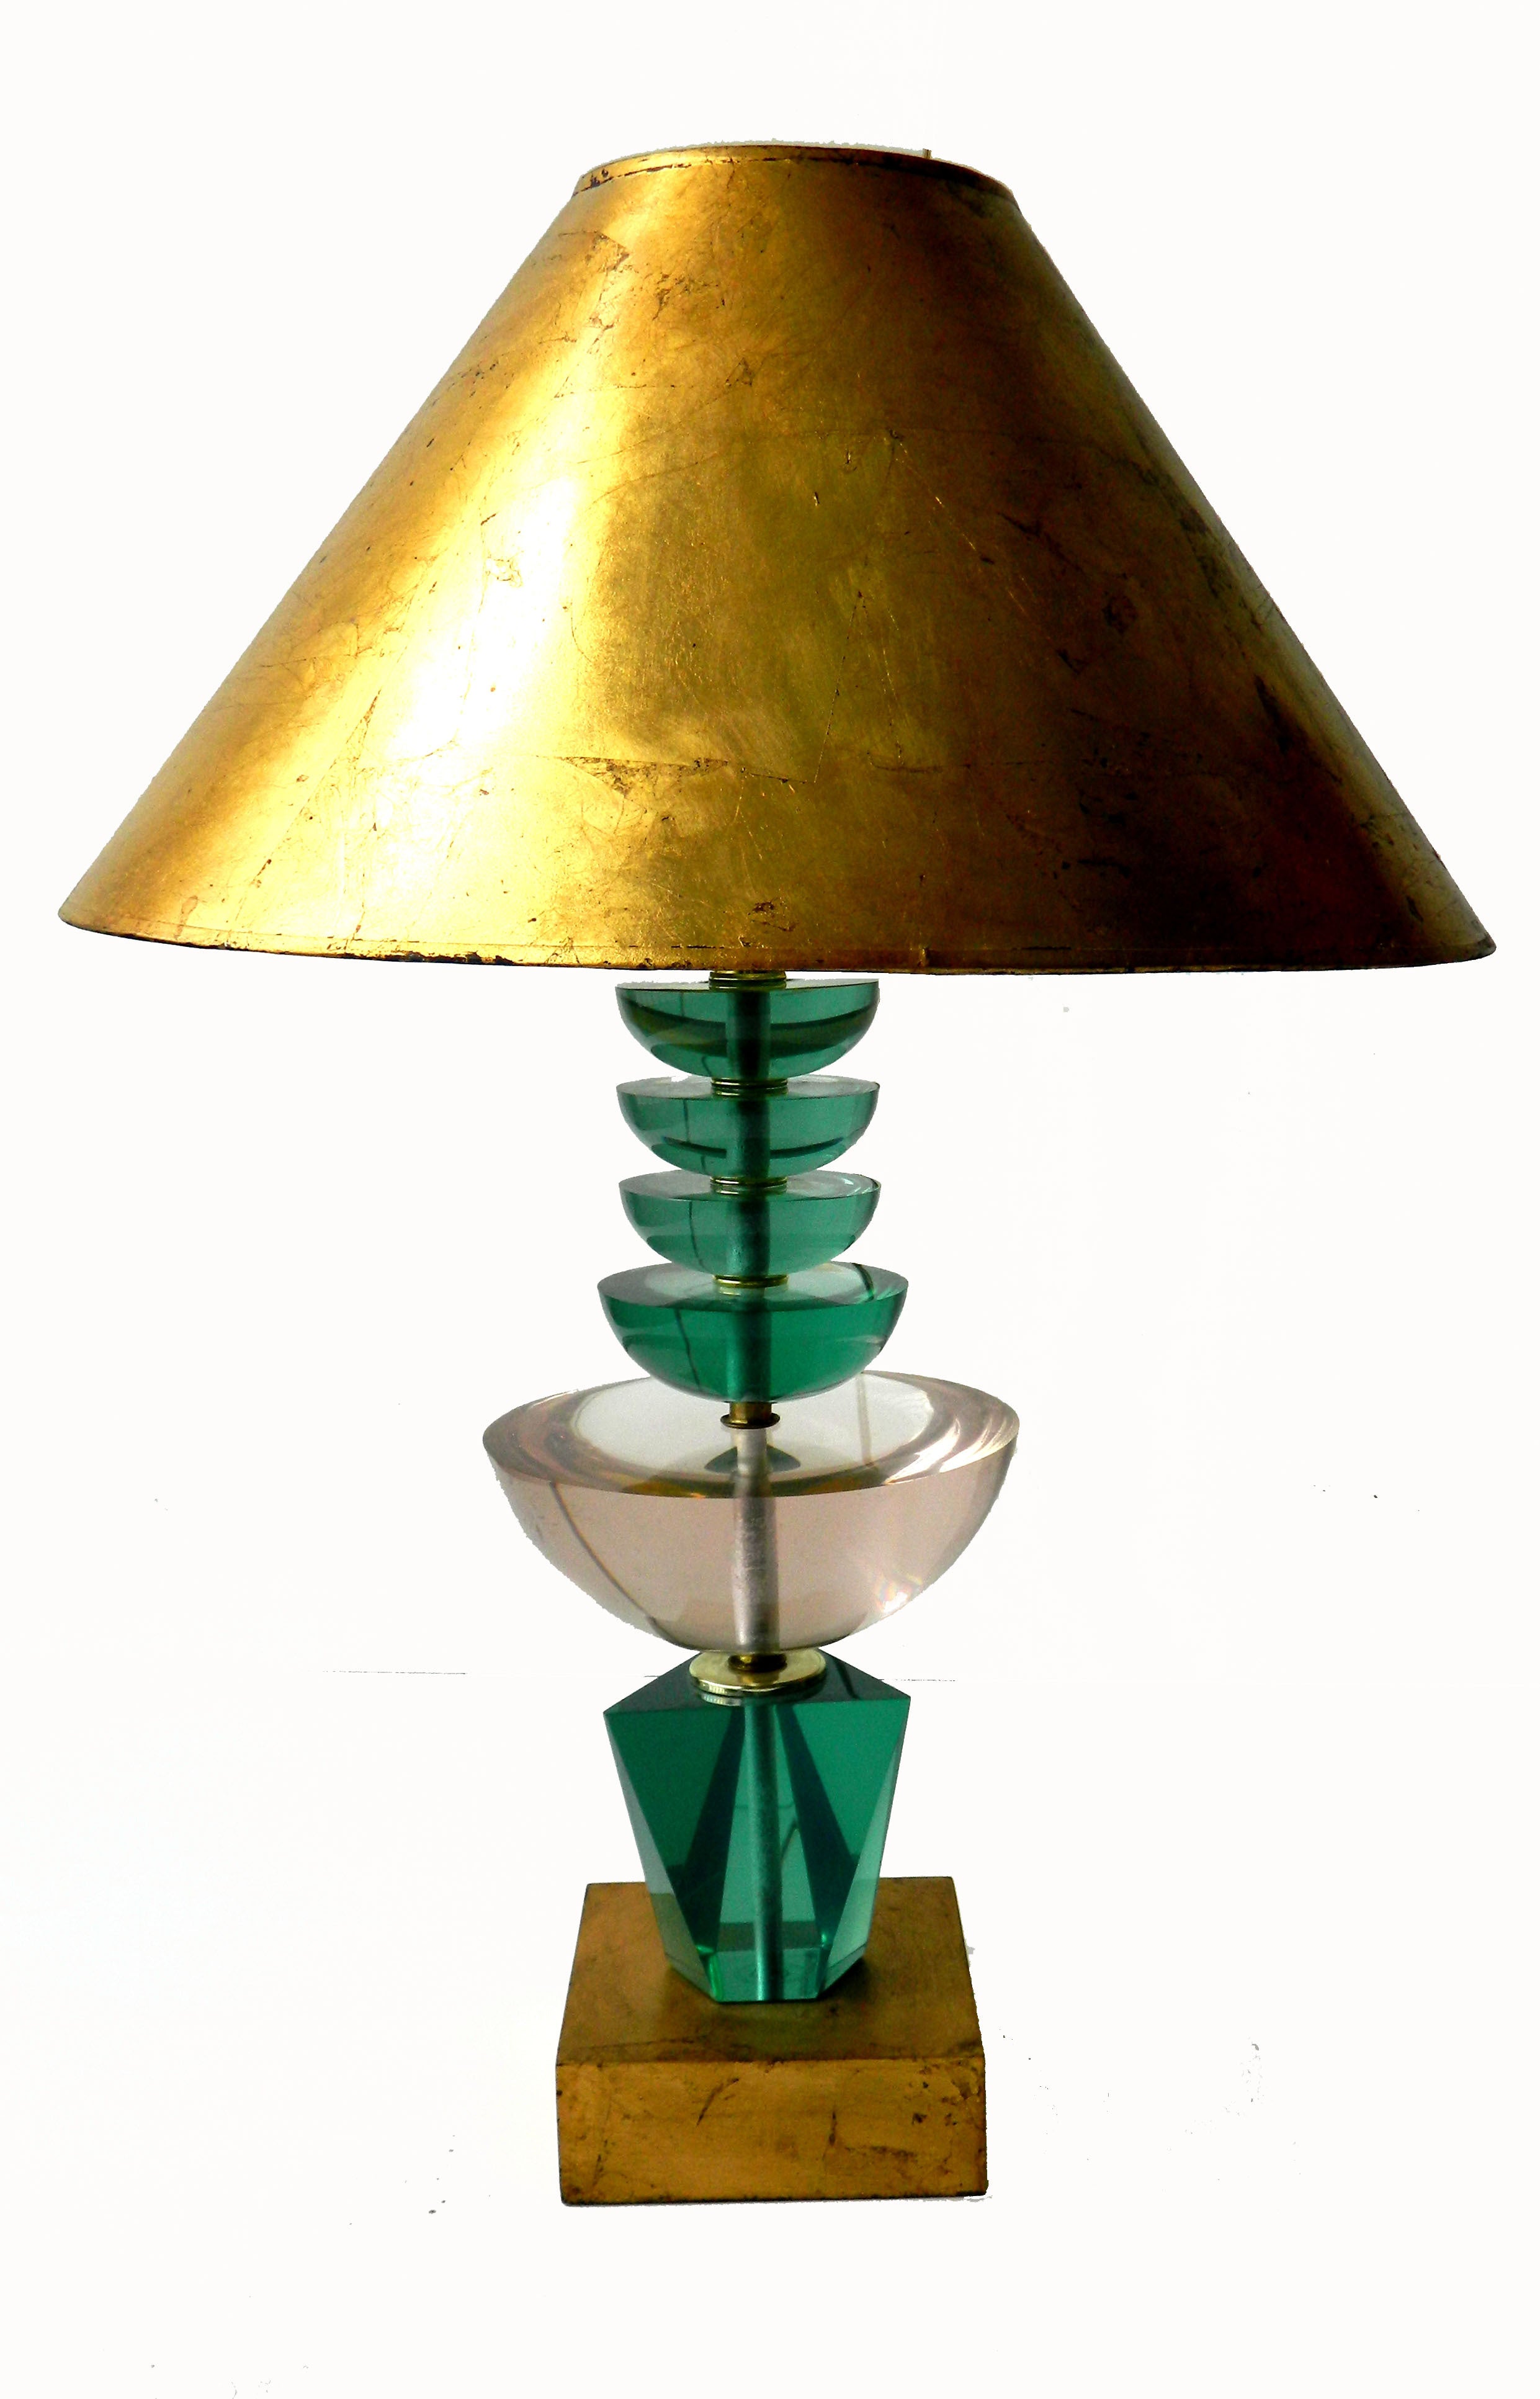 Lampe de bureau Hivo Van Teal empilée en lucite transparente et verte, mi-siècle moderne, 1979